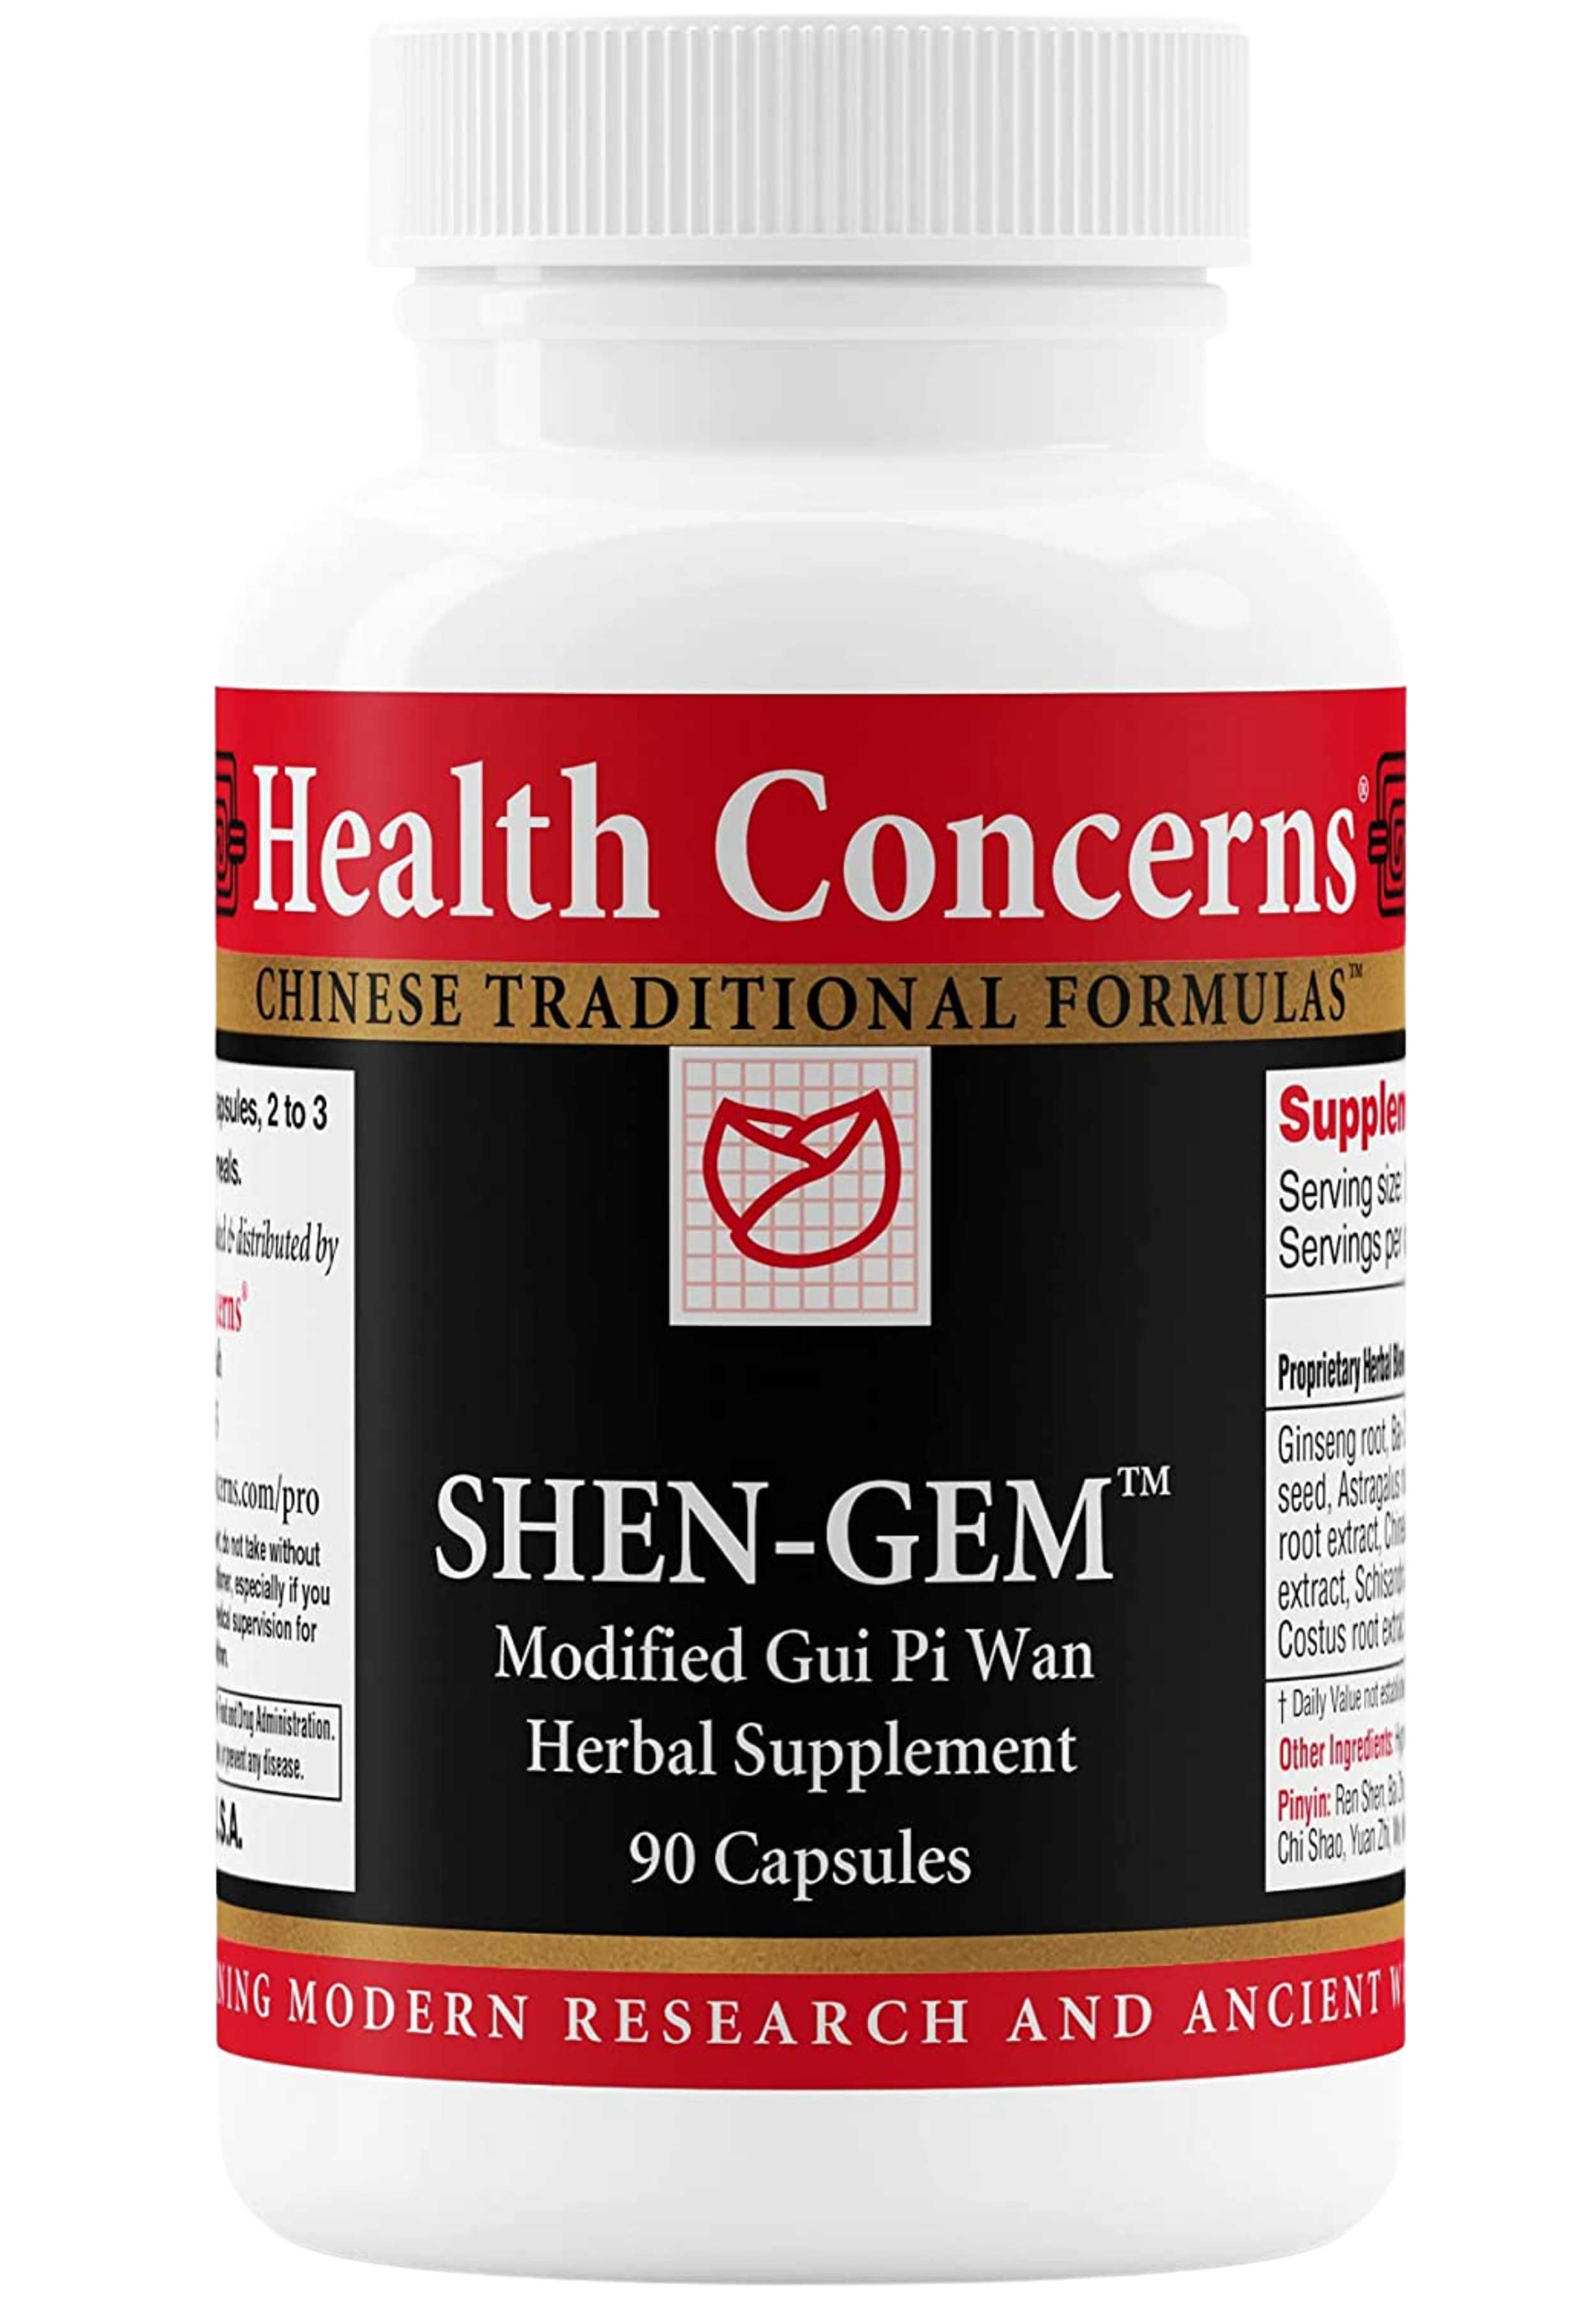 Health Concerns Shen-Gem